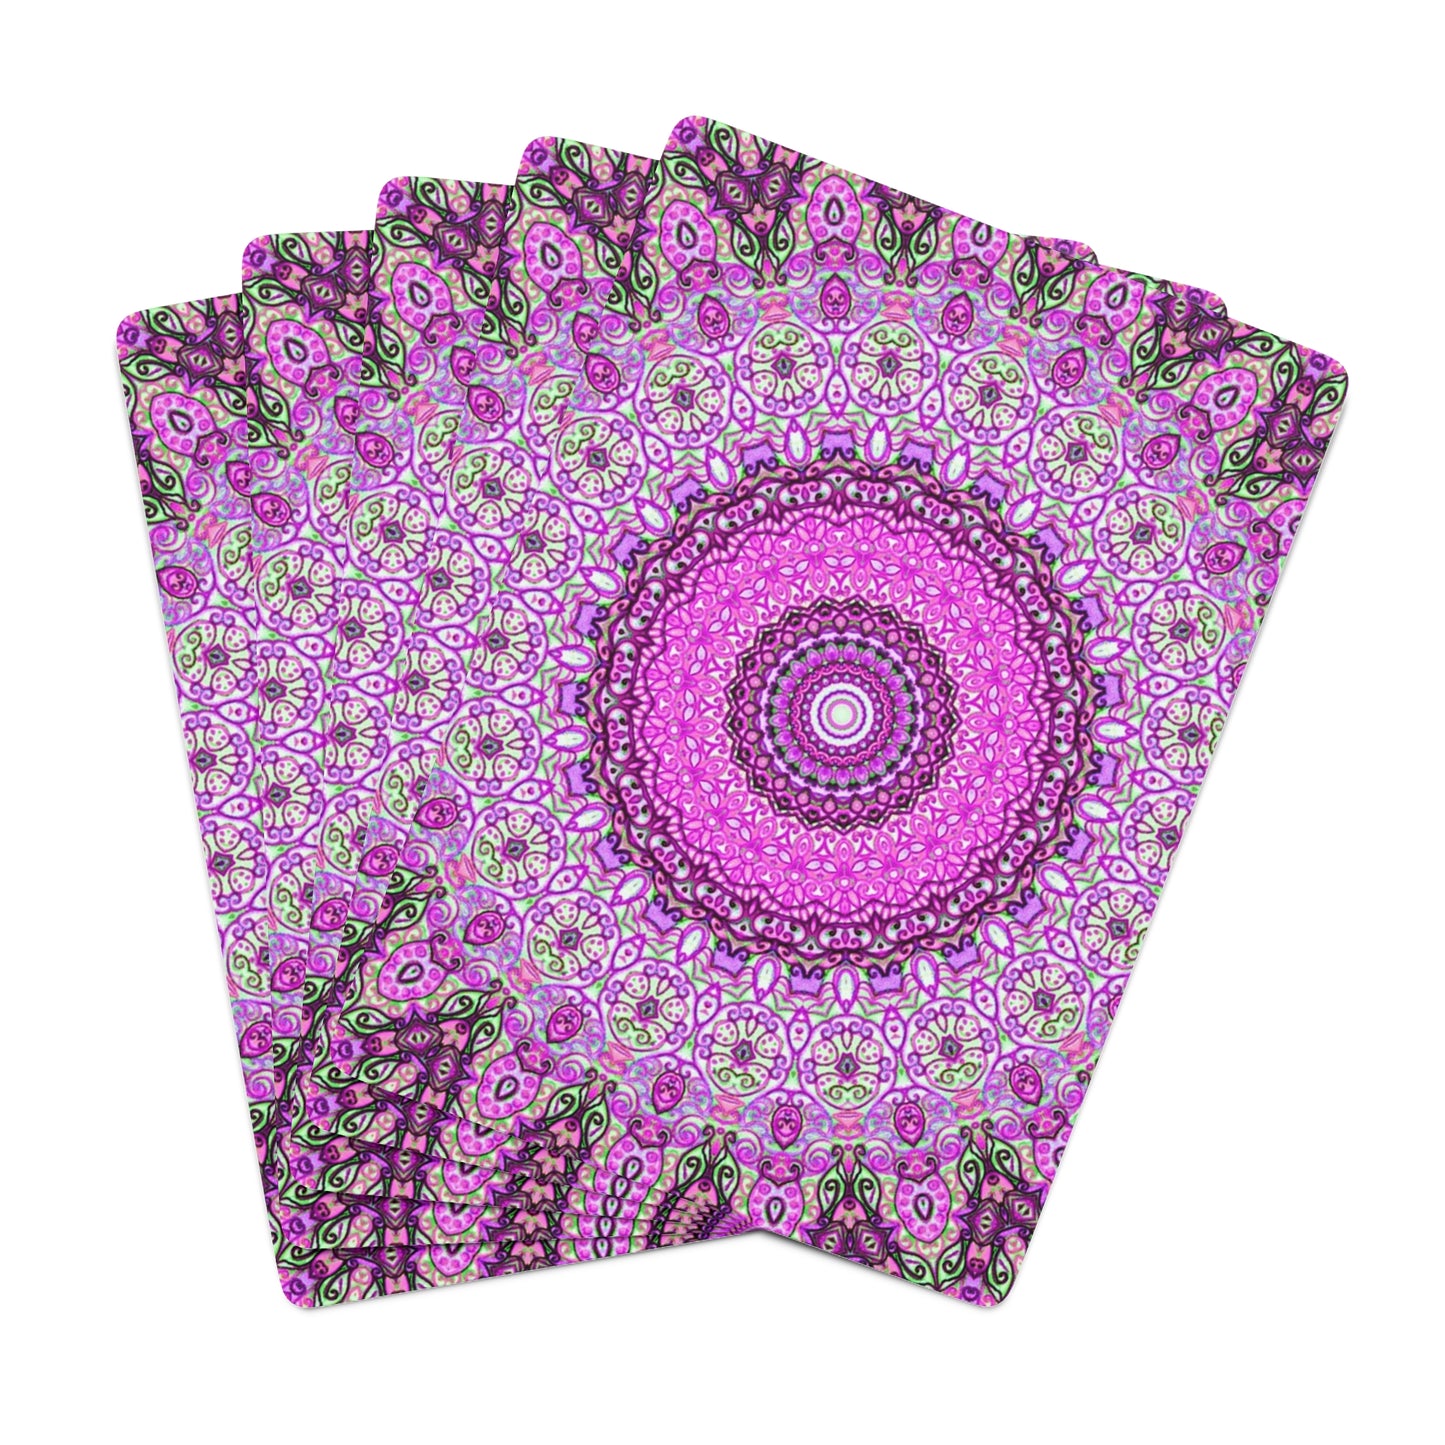 Mandala Playing Cards in Pink + Purple